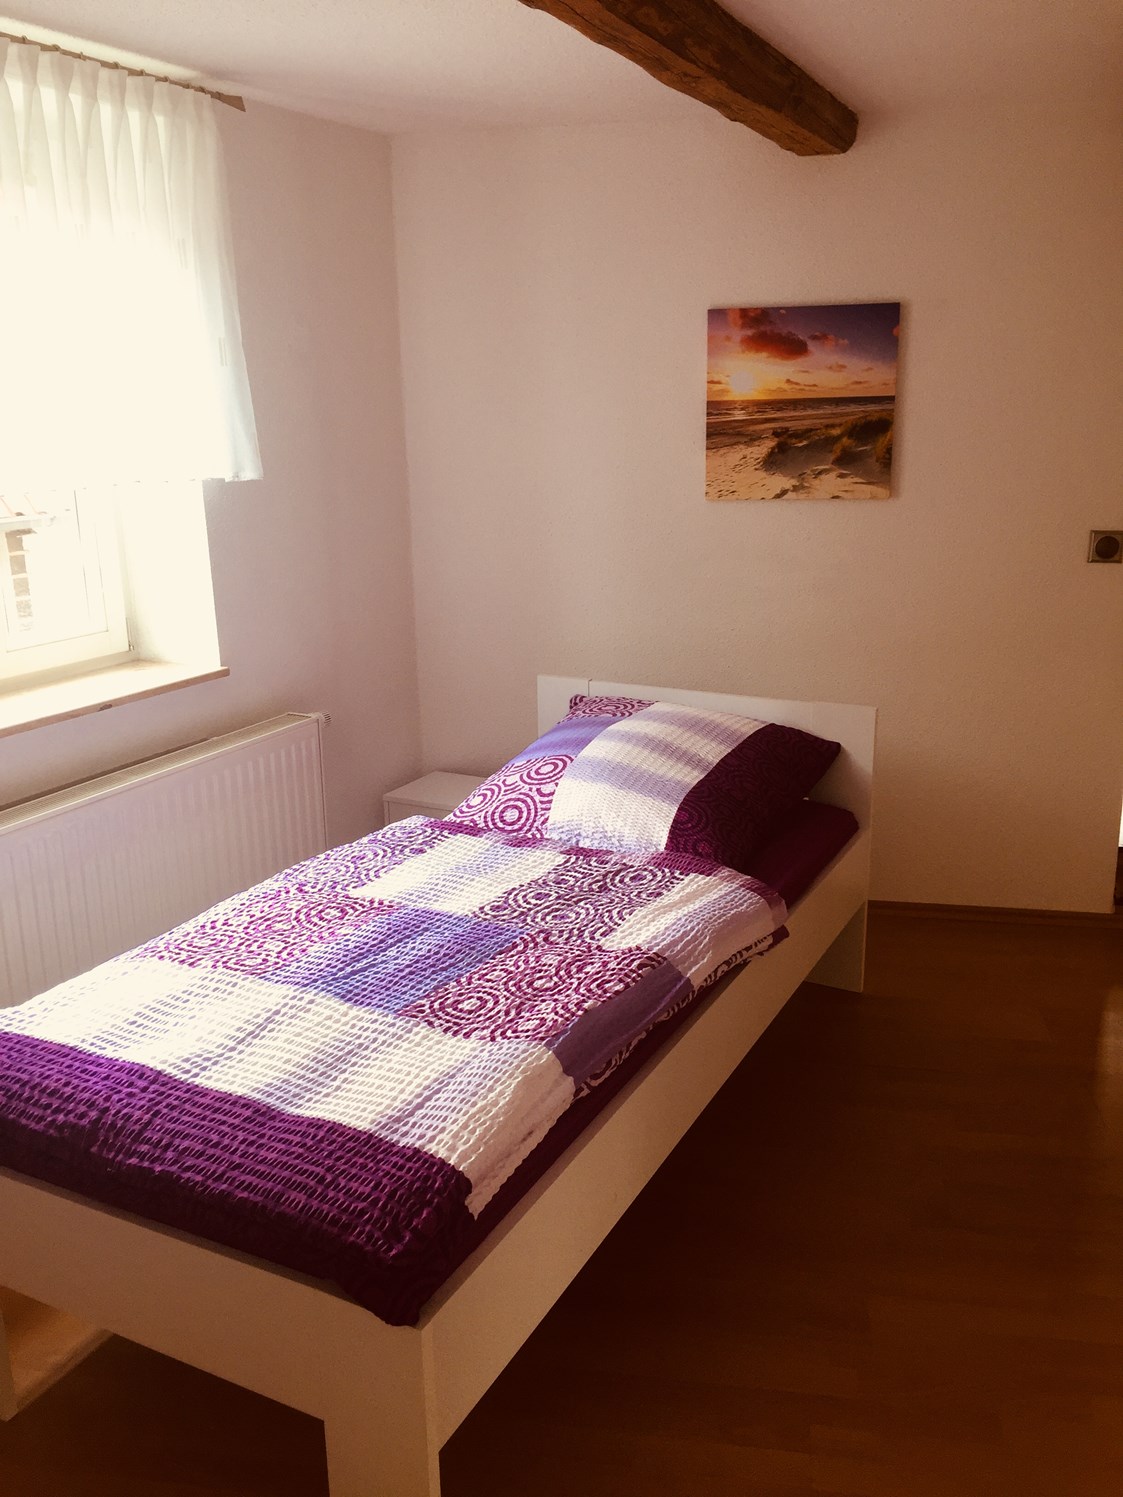 Monteurzimmer: Bett im Durchgangszimmer - Ferienwohnung "Altstadtblick" - top Ausstattung